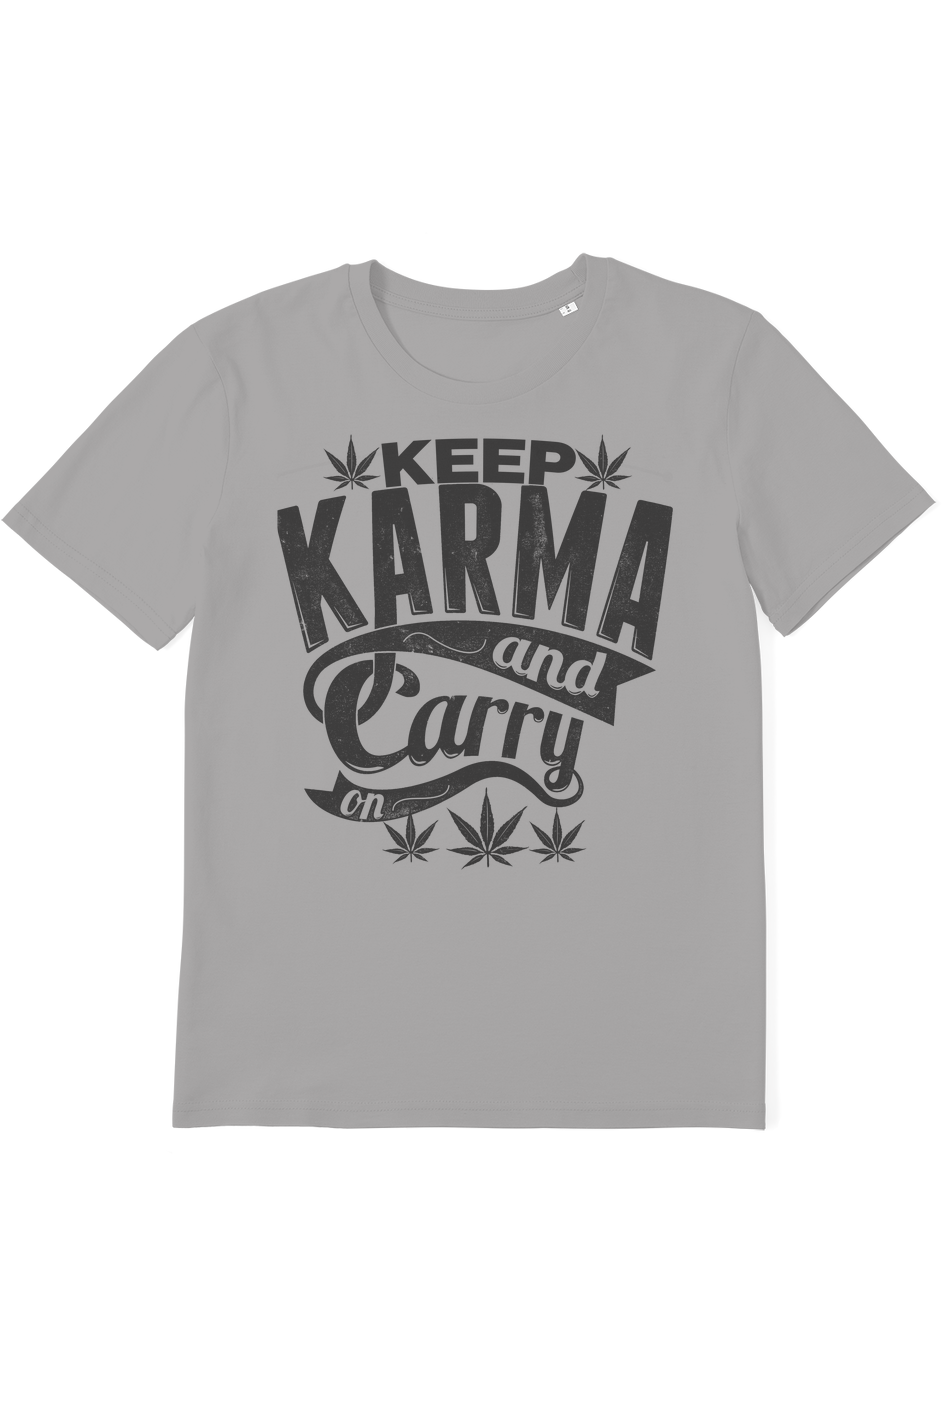 Keep Karma Organic T-Shirt vegan, sustainable, organic streetwear, - TRVTH ORGANIC CLOTHING